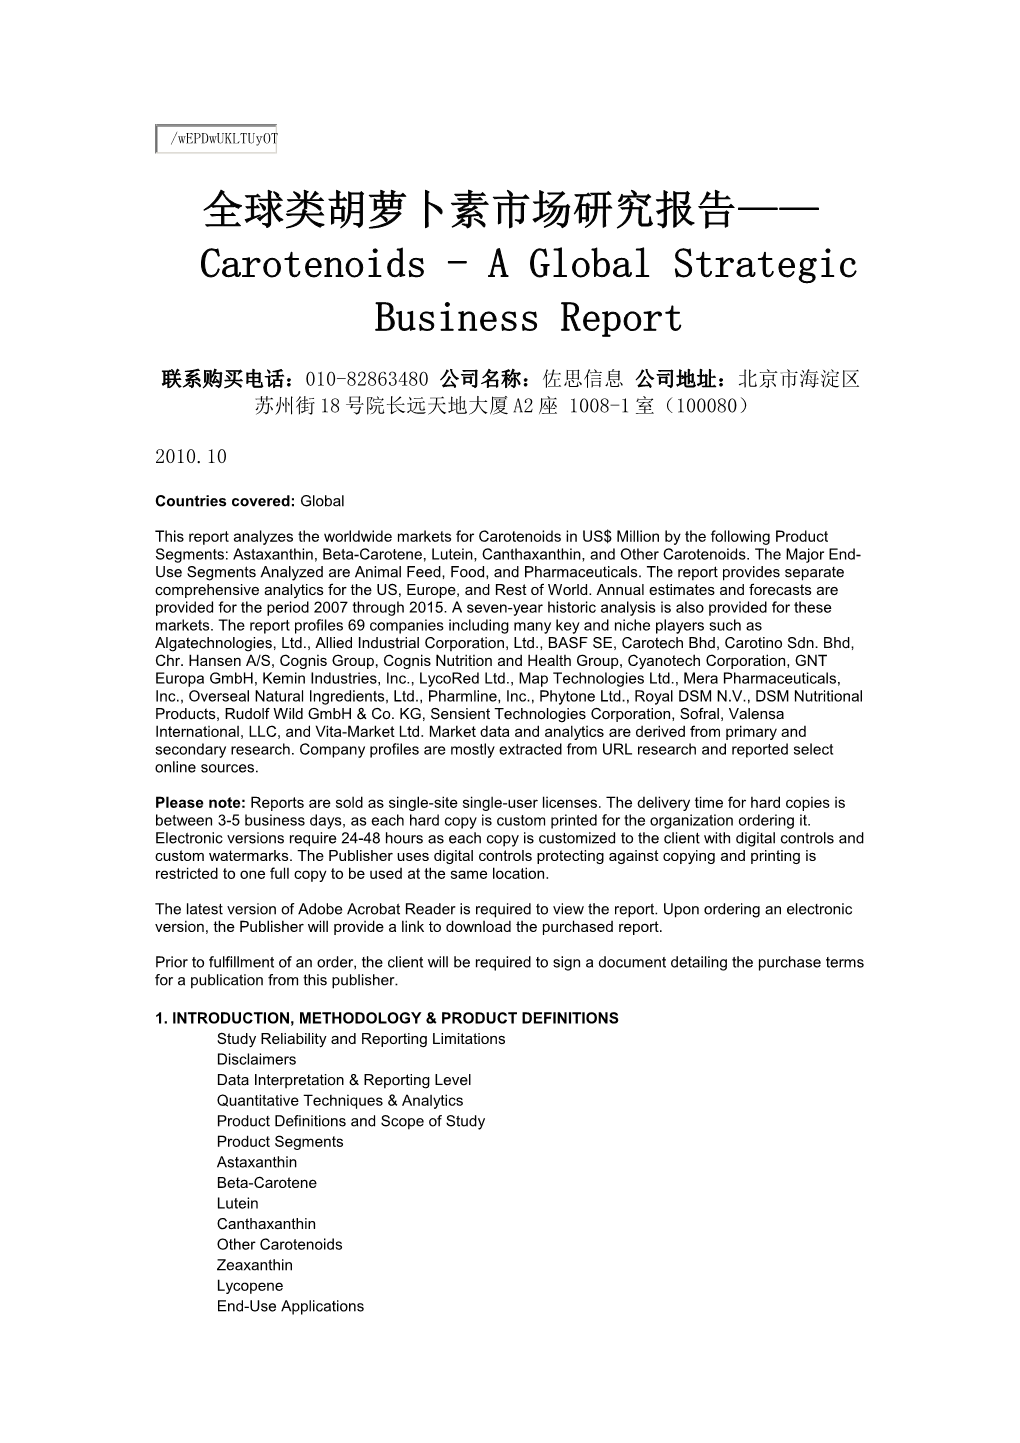 全球类胡萝卜素市场研究报告 Carotenoids - a Global Strategic Business Report